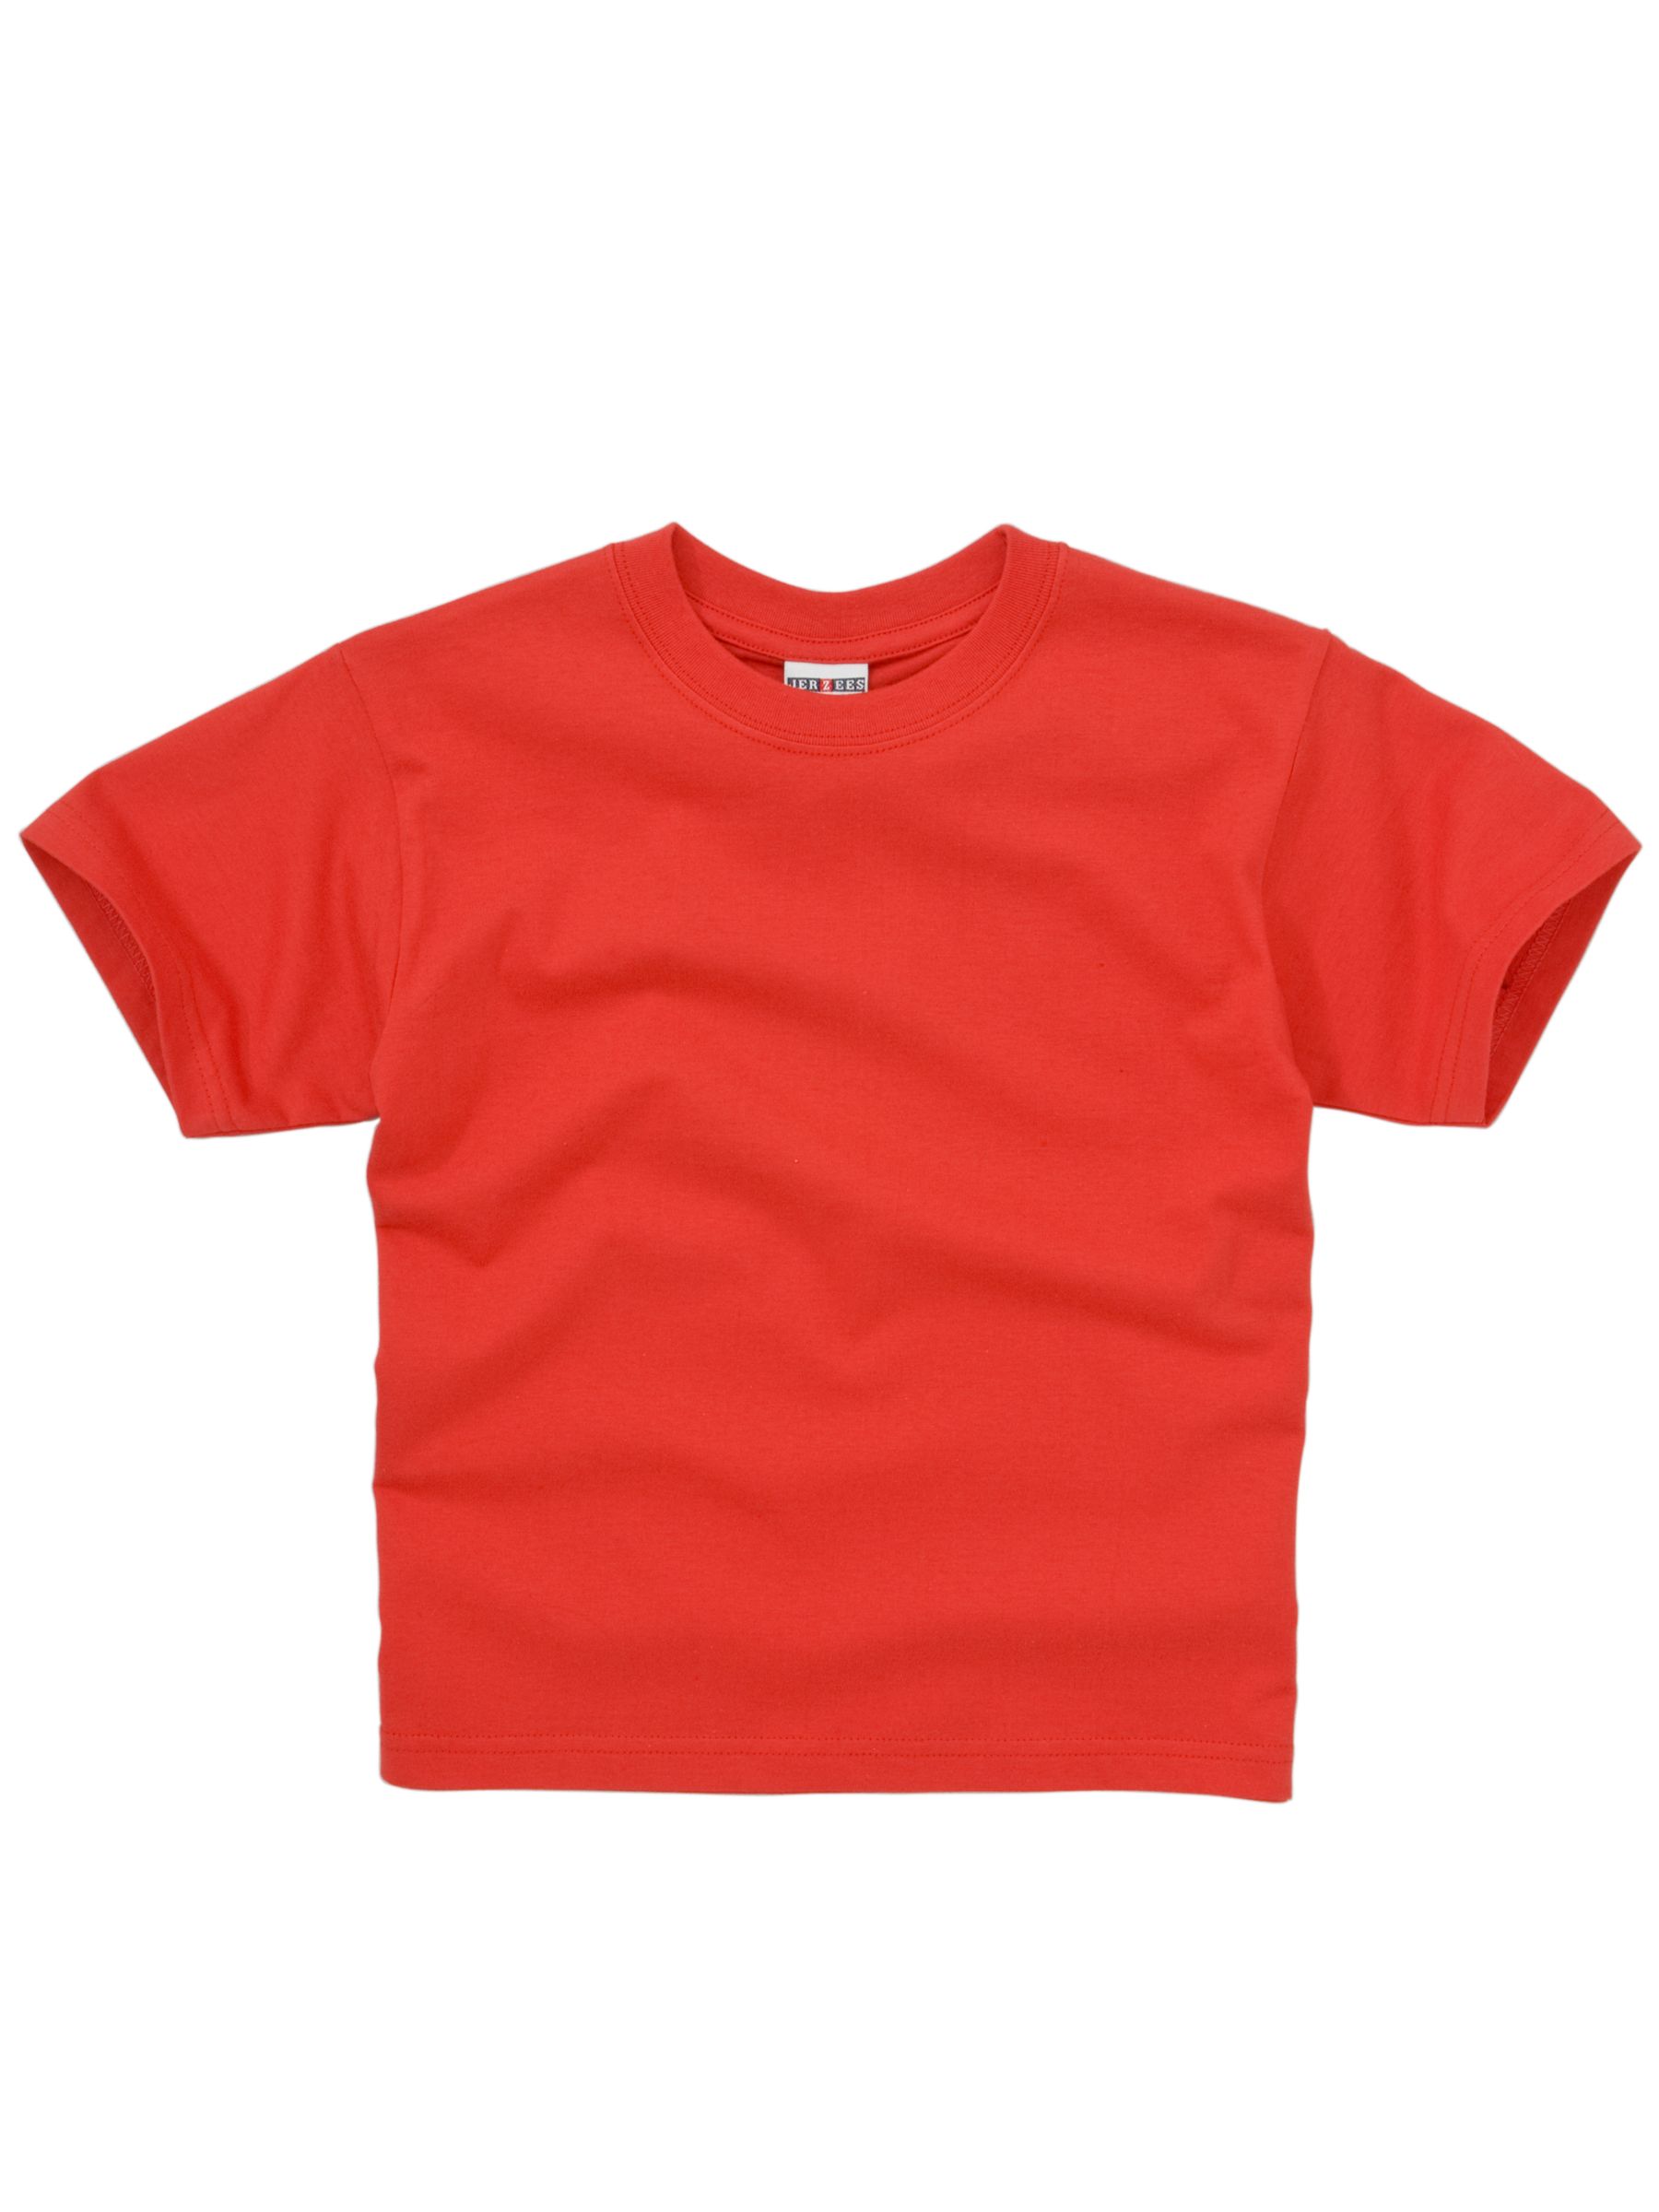 John Lewis Short Sleeve Crew Neck PE T-Shirt, Red